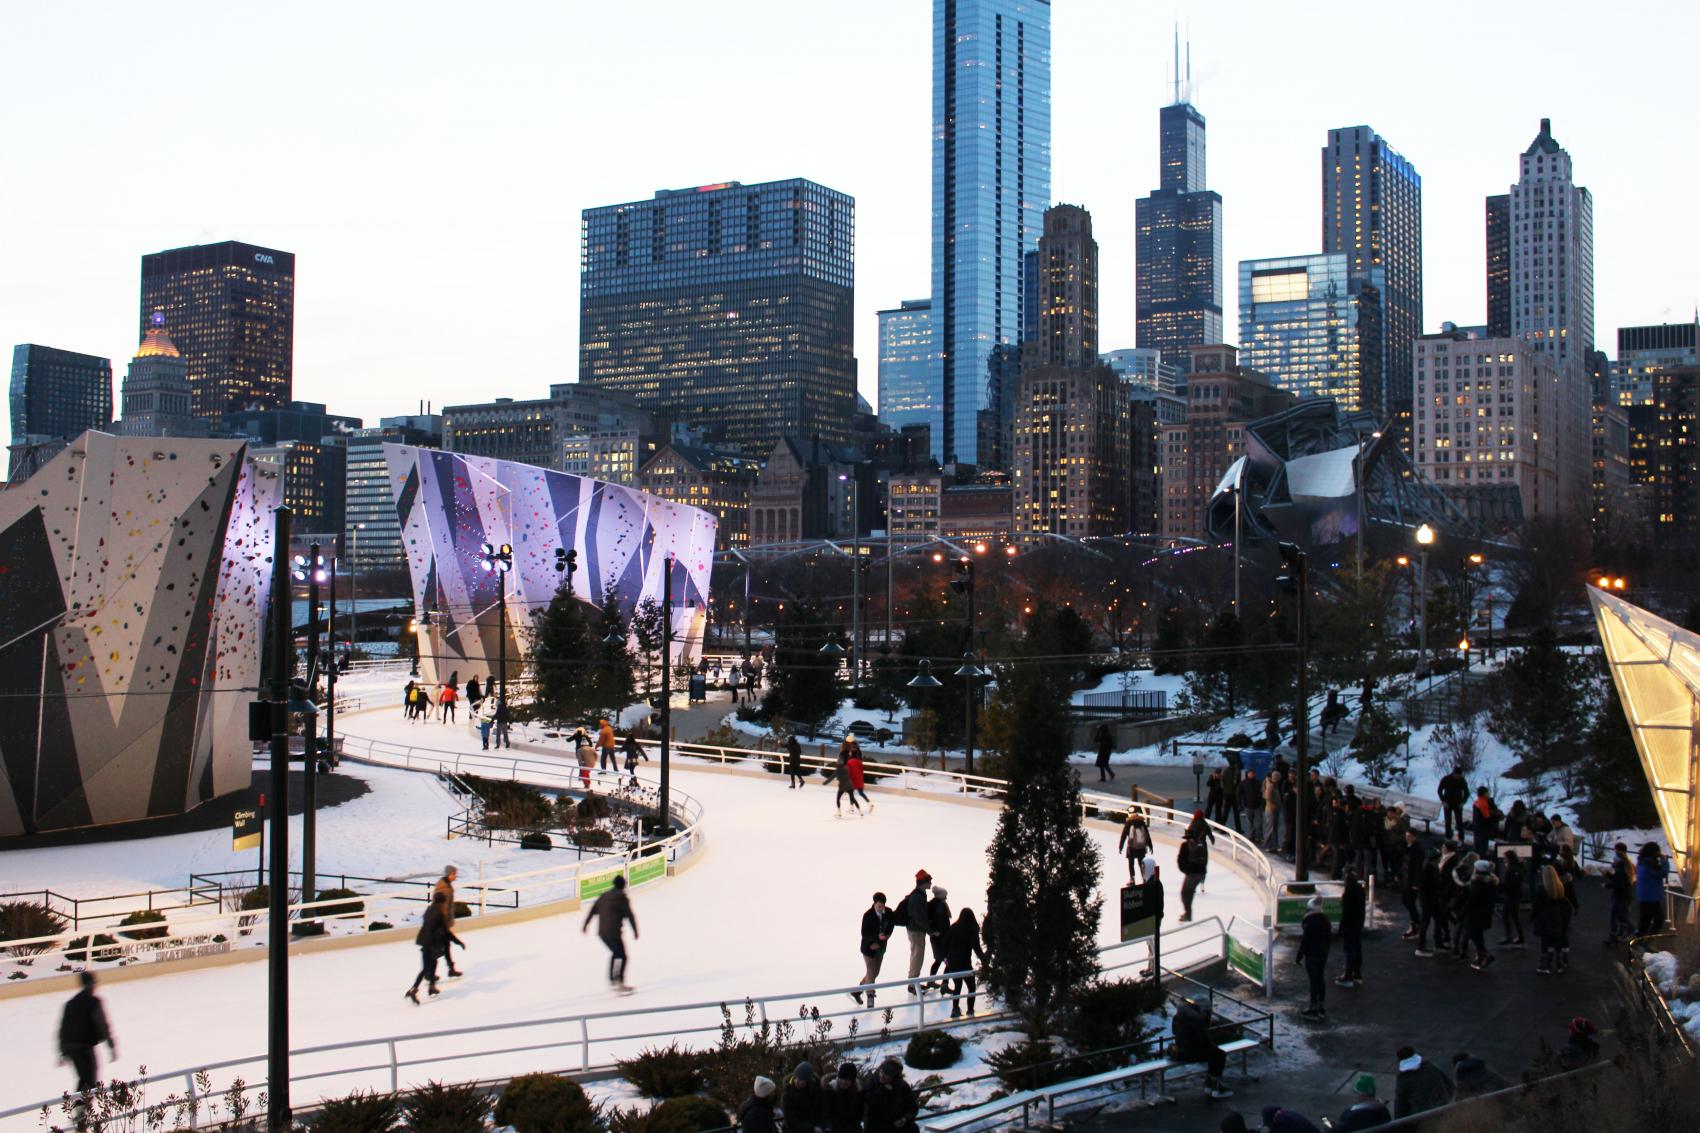 The Best Ice Skating Rinks in Chicago Travel Insider